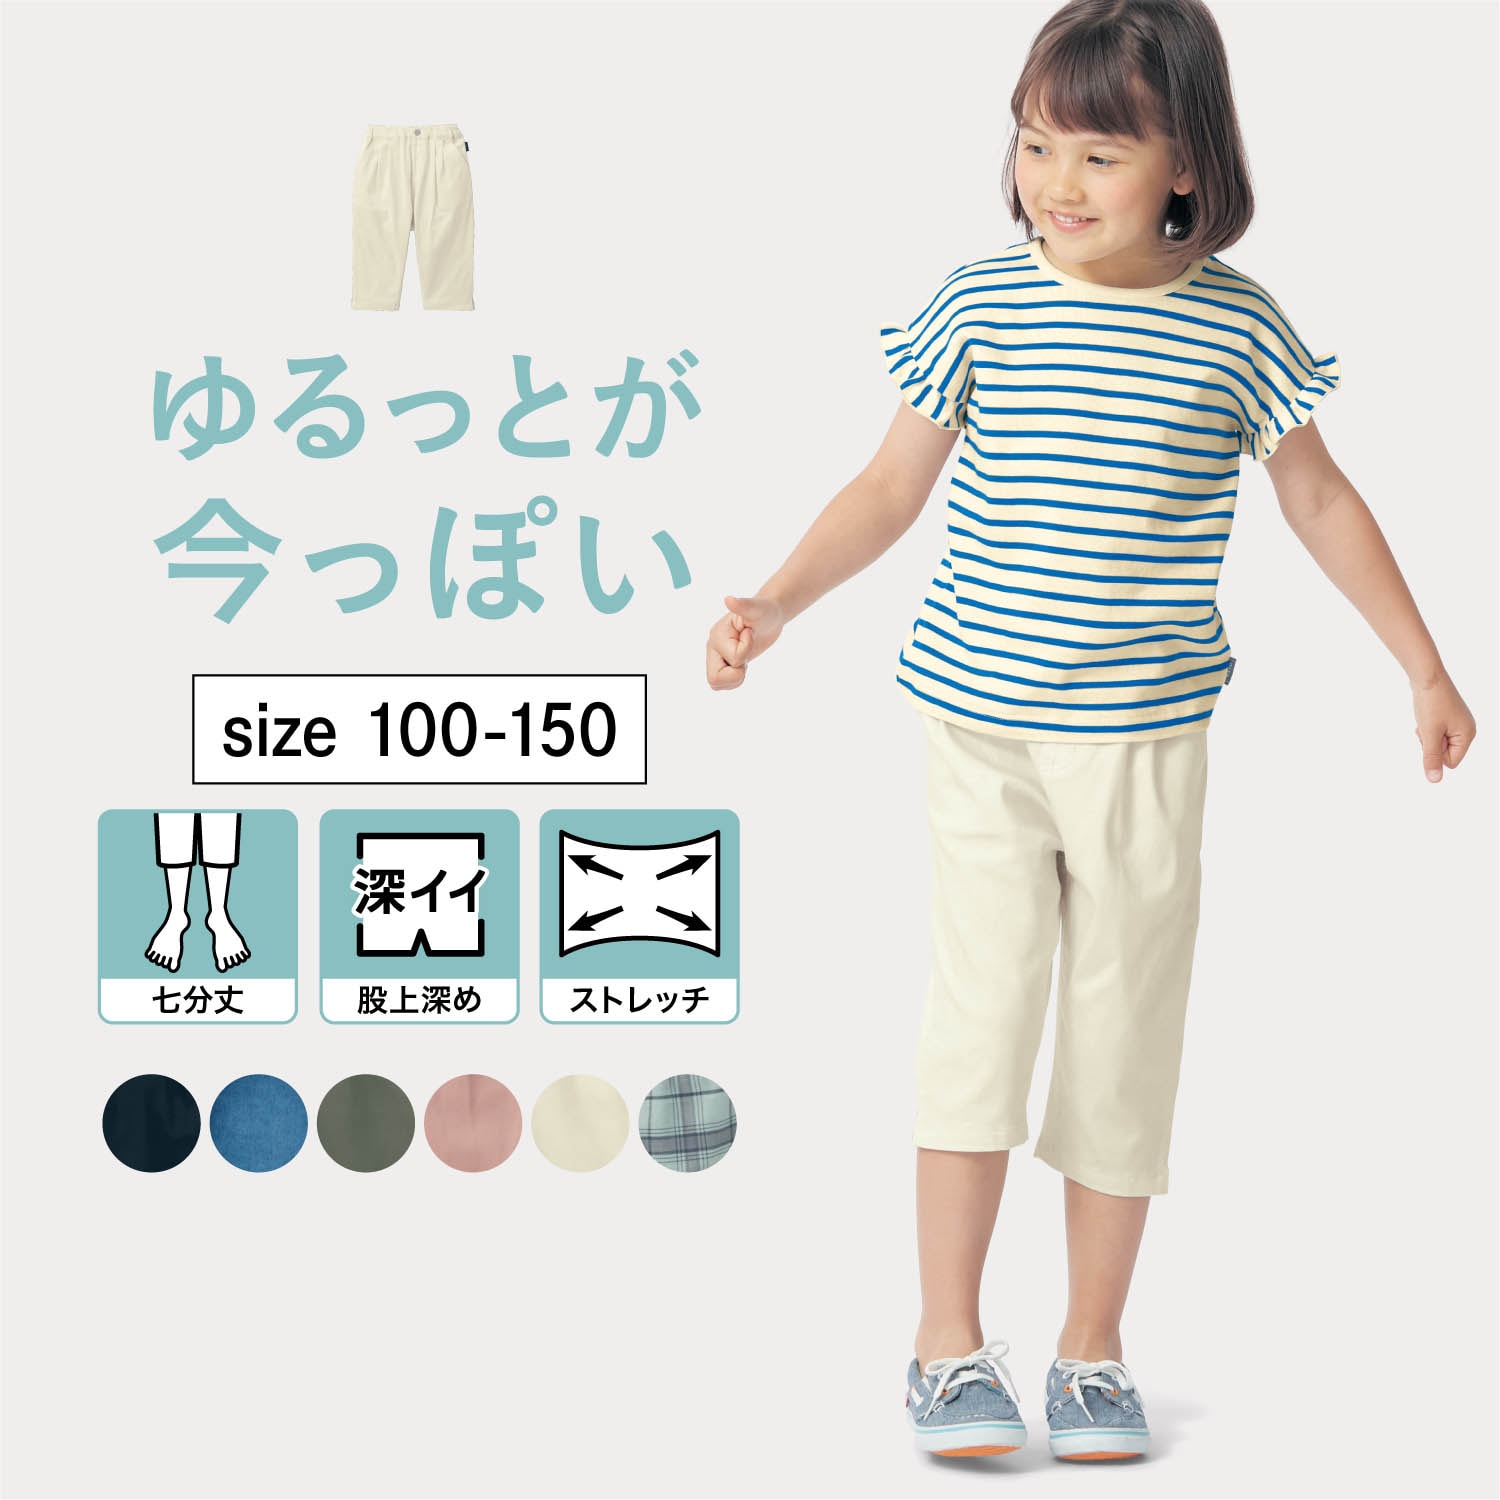 15%OFF！【セラフ/Seraph】カラーショートパンツ【子供服】